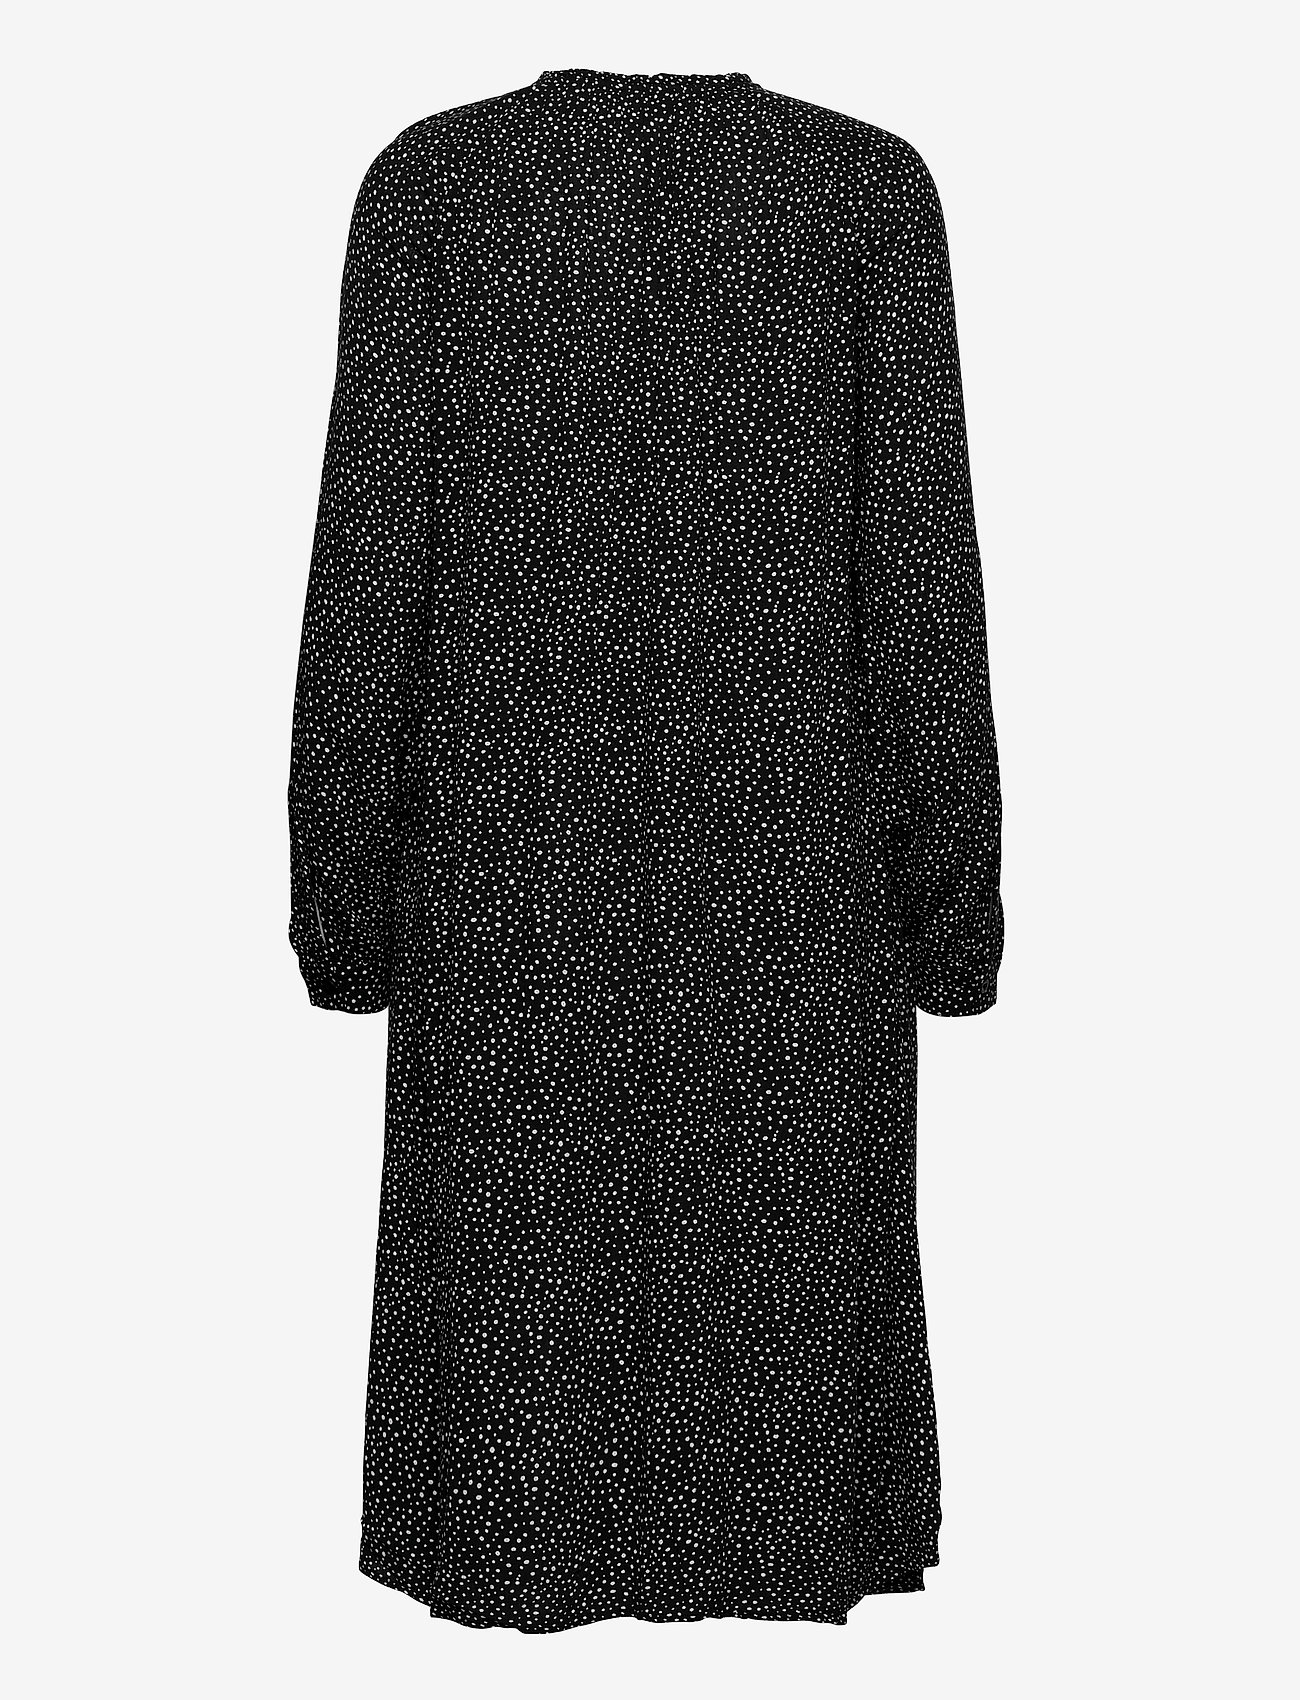 EDC by Esprit - Dresses light woven - midikleidid - black 3 - 1